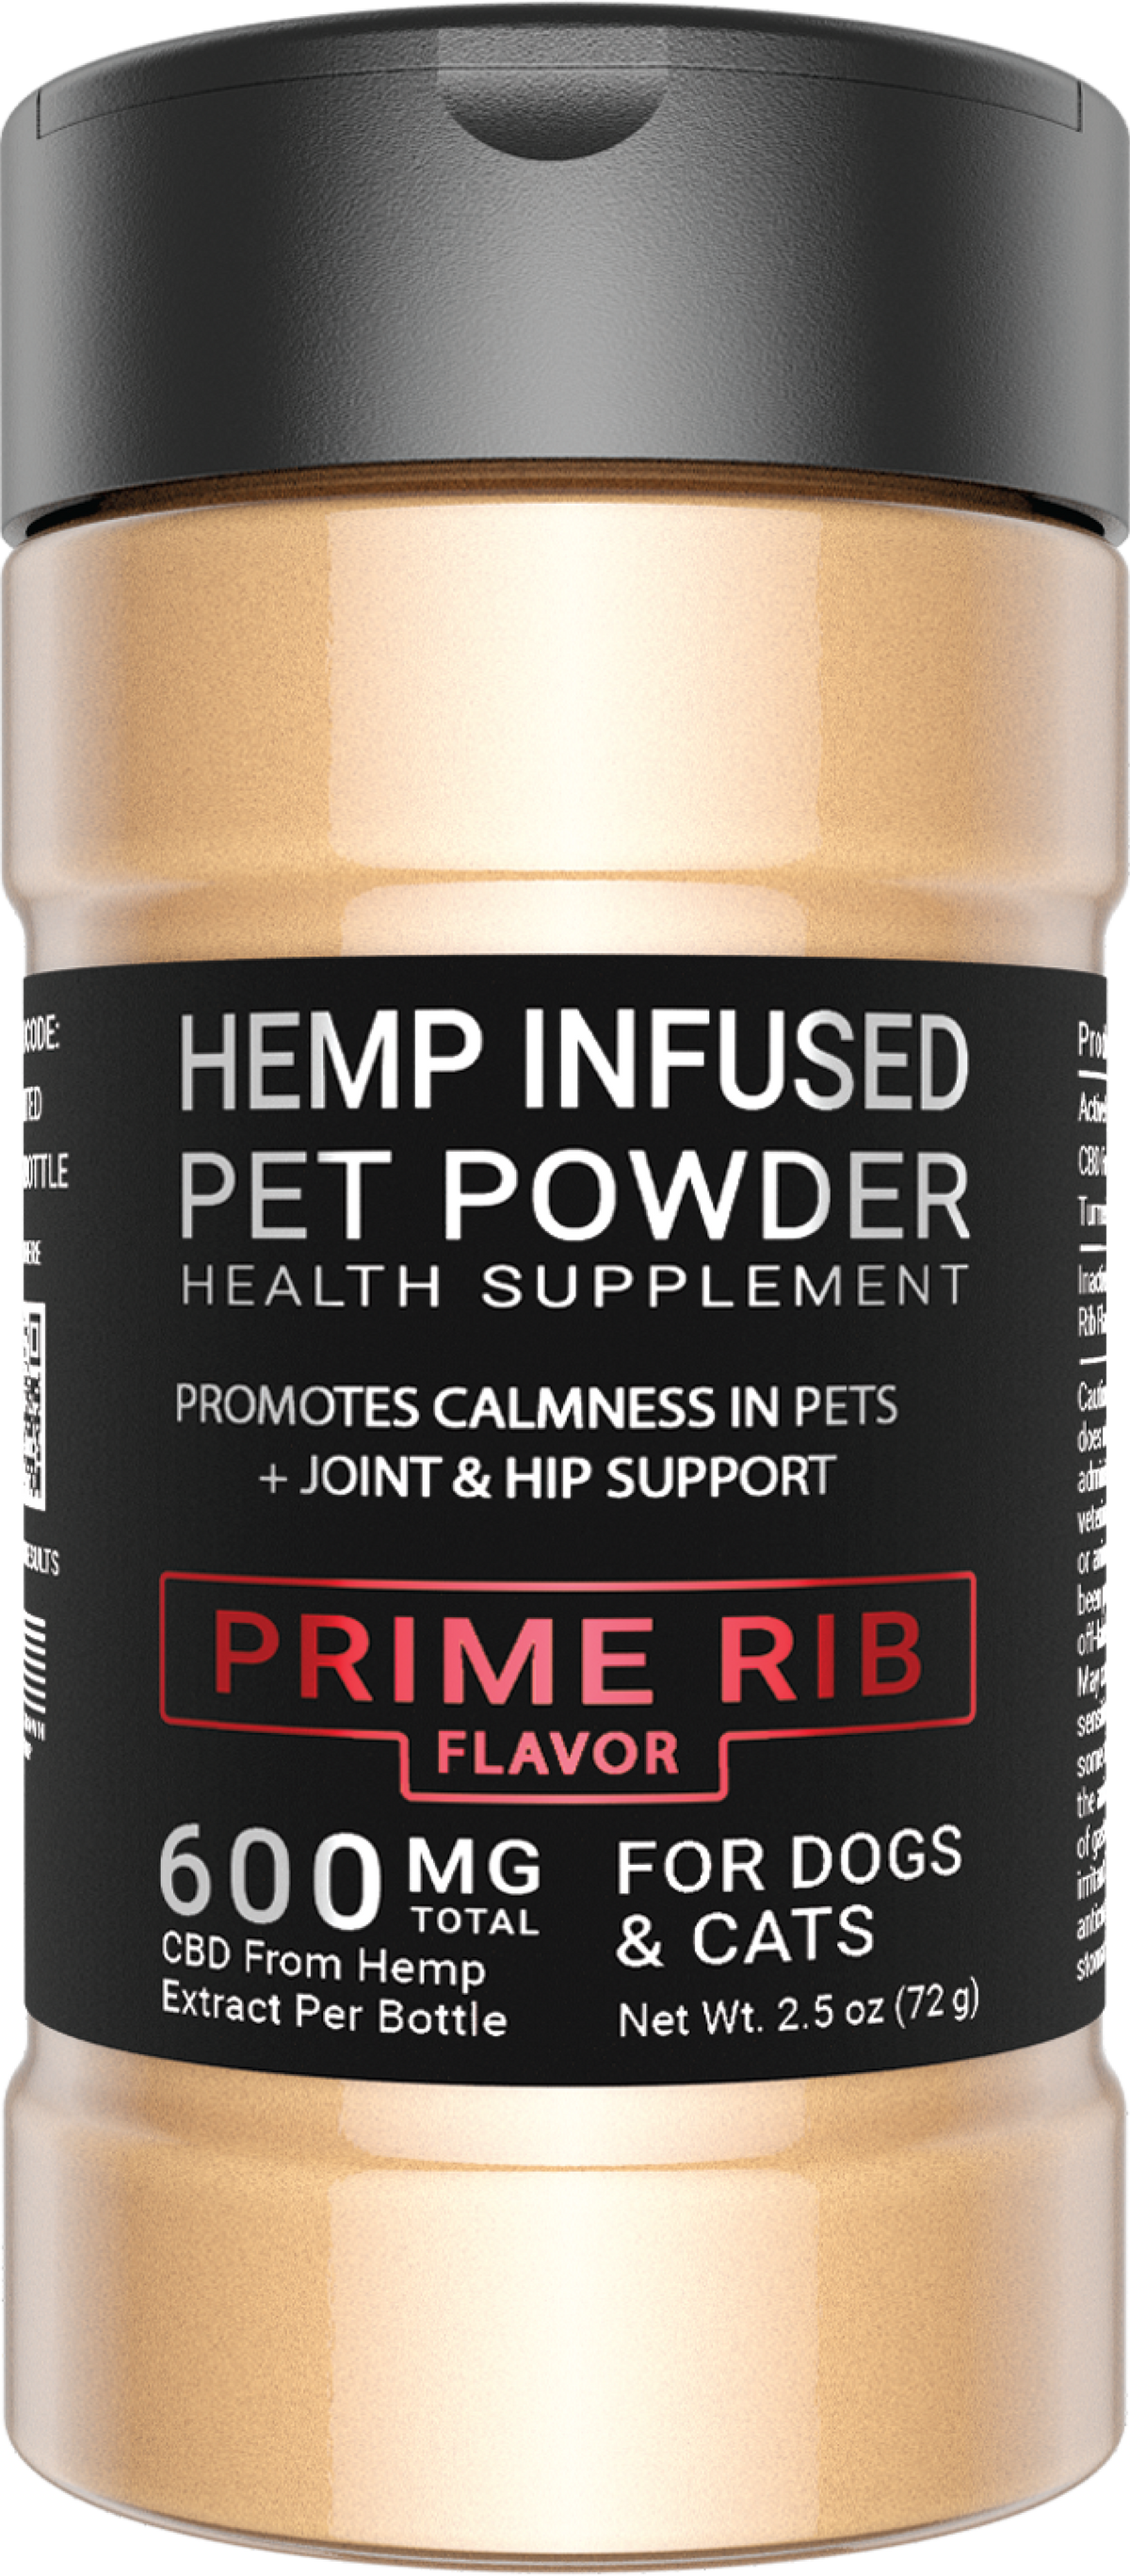 CBDOps hemp infused CBD pet powder product.